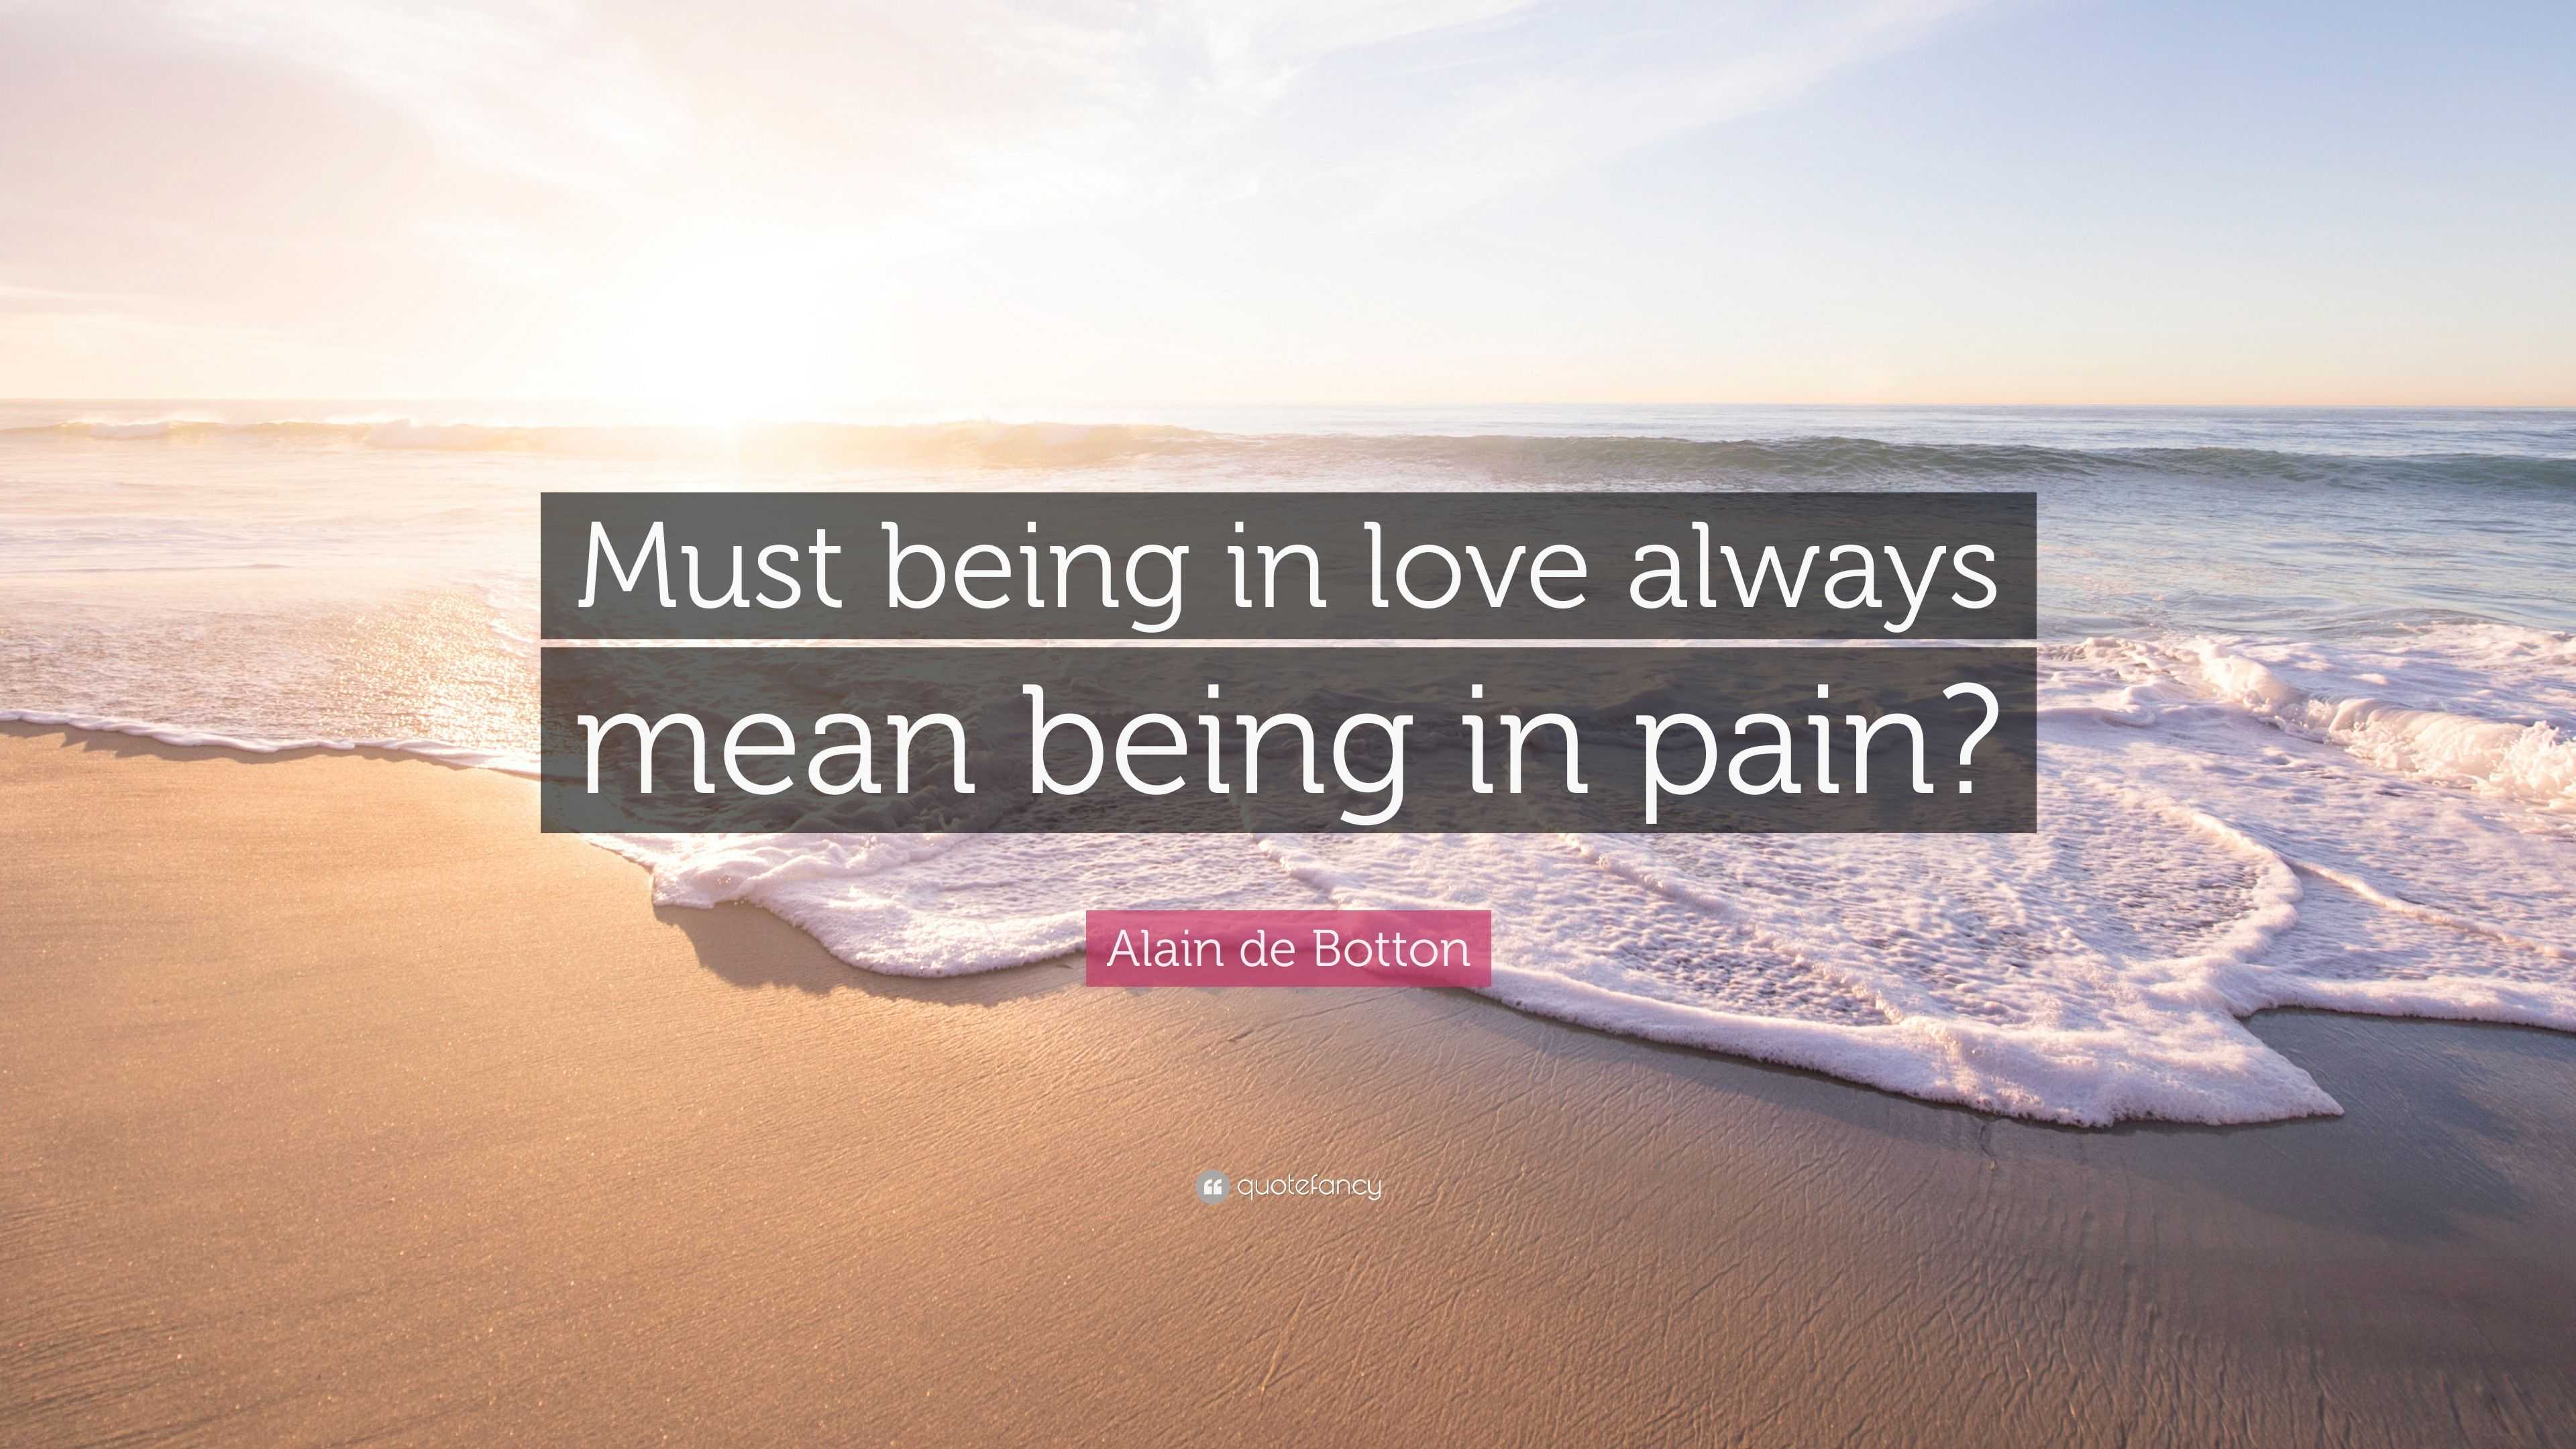 Alain de Botton Quote: "Must being in love always mean ...